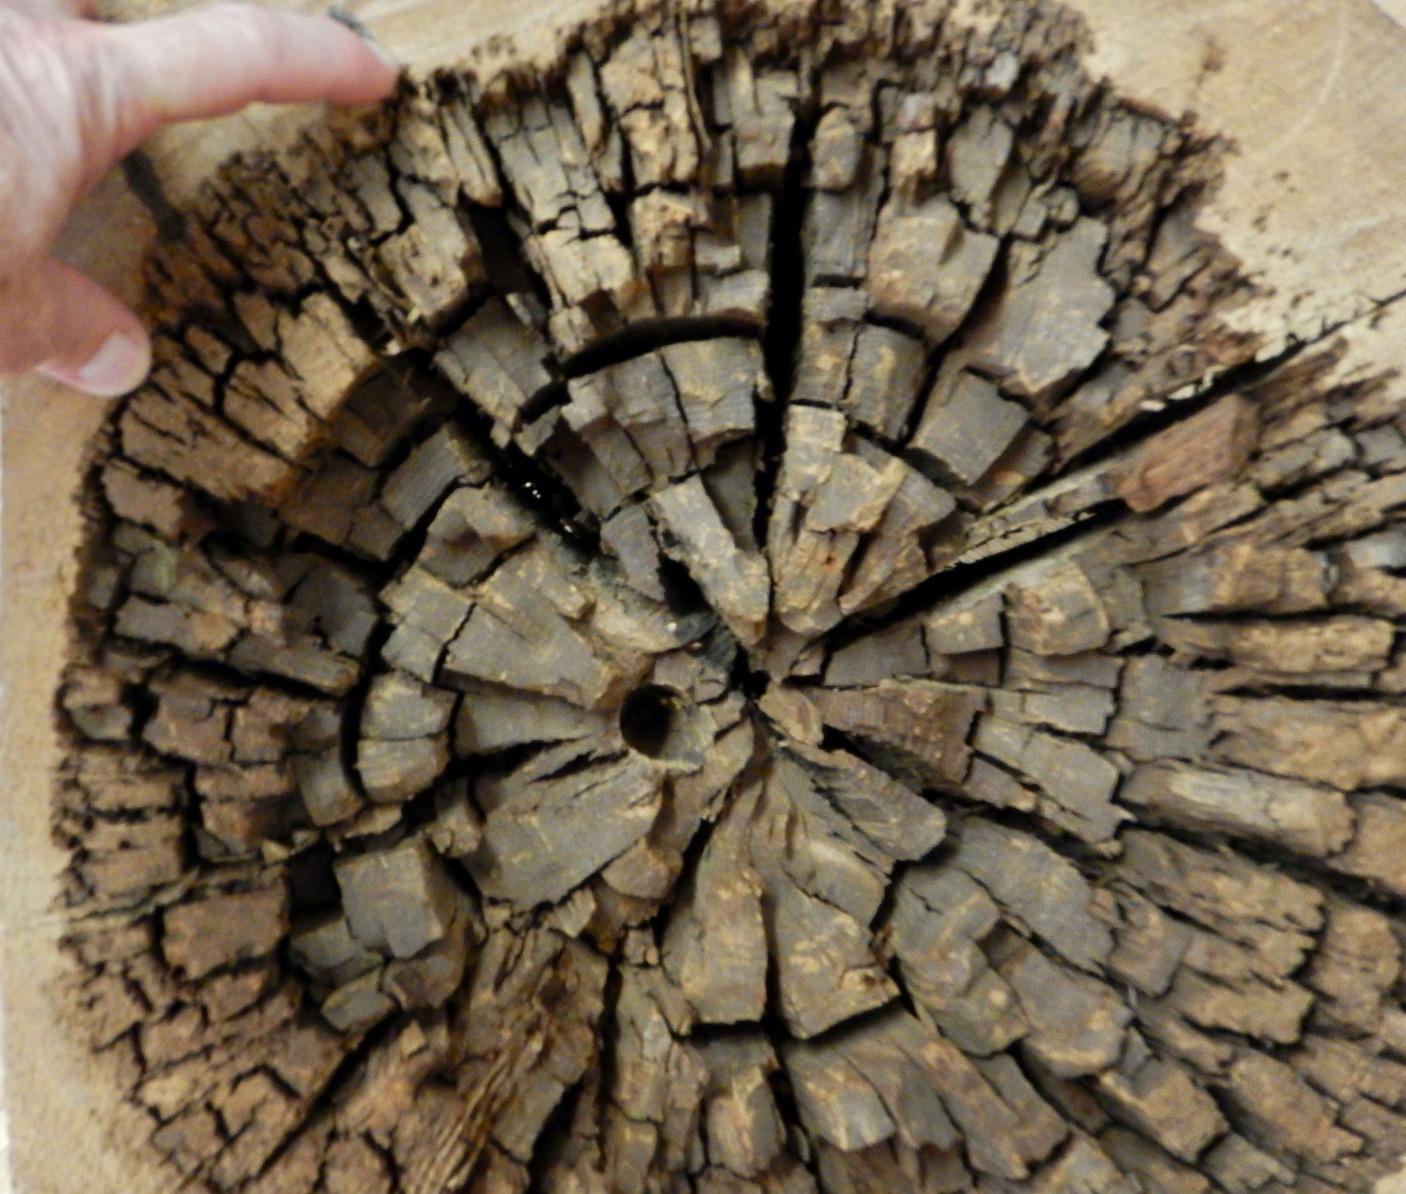 New biomass conversion tool: Fungi that eat wood